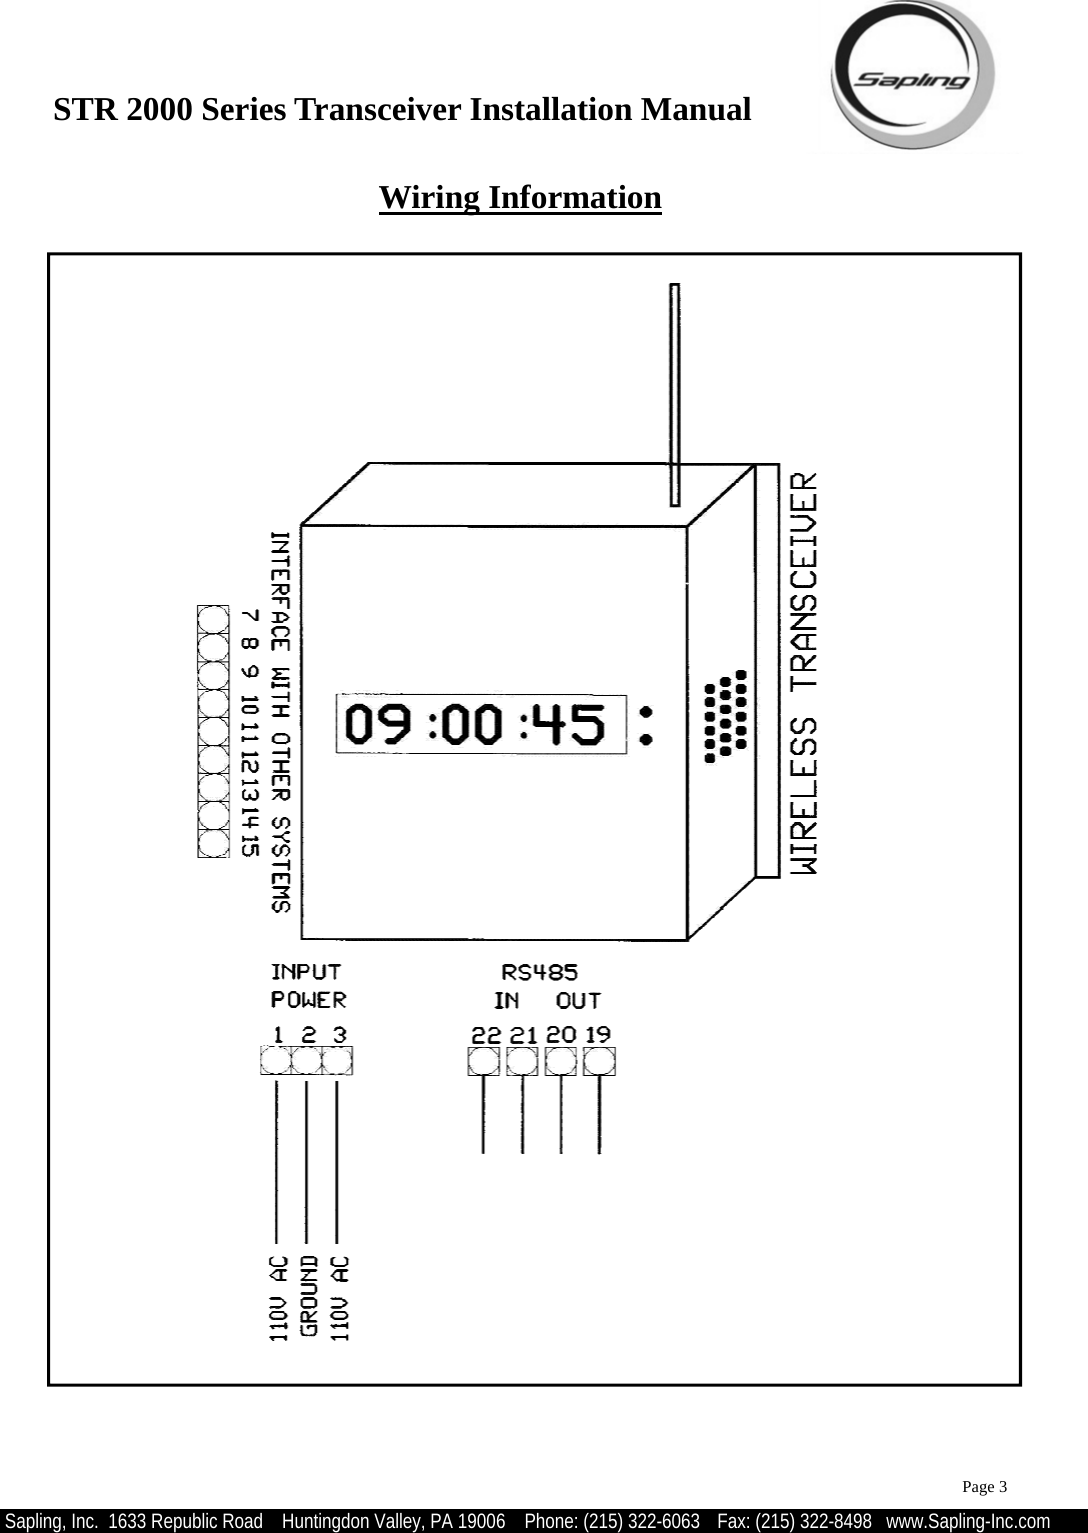 STR 2000 Series Transceiver Installation Manual  Sapling, Inc.  1633 Republic Road    Huntingdon Valley, PA 19006    Phone: (215) 322-6063   Fax: (215) 322-8498   www.Sapling-Inc.com Wiring Information Page 3  